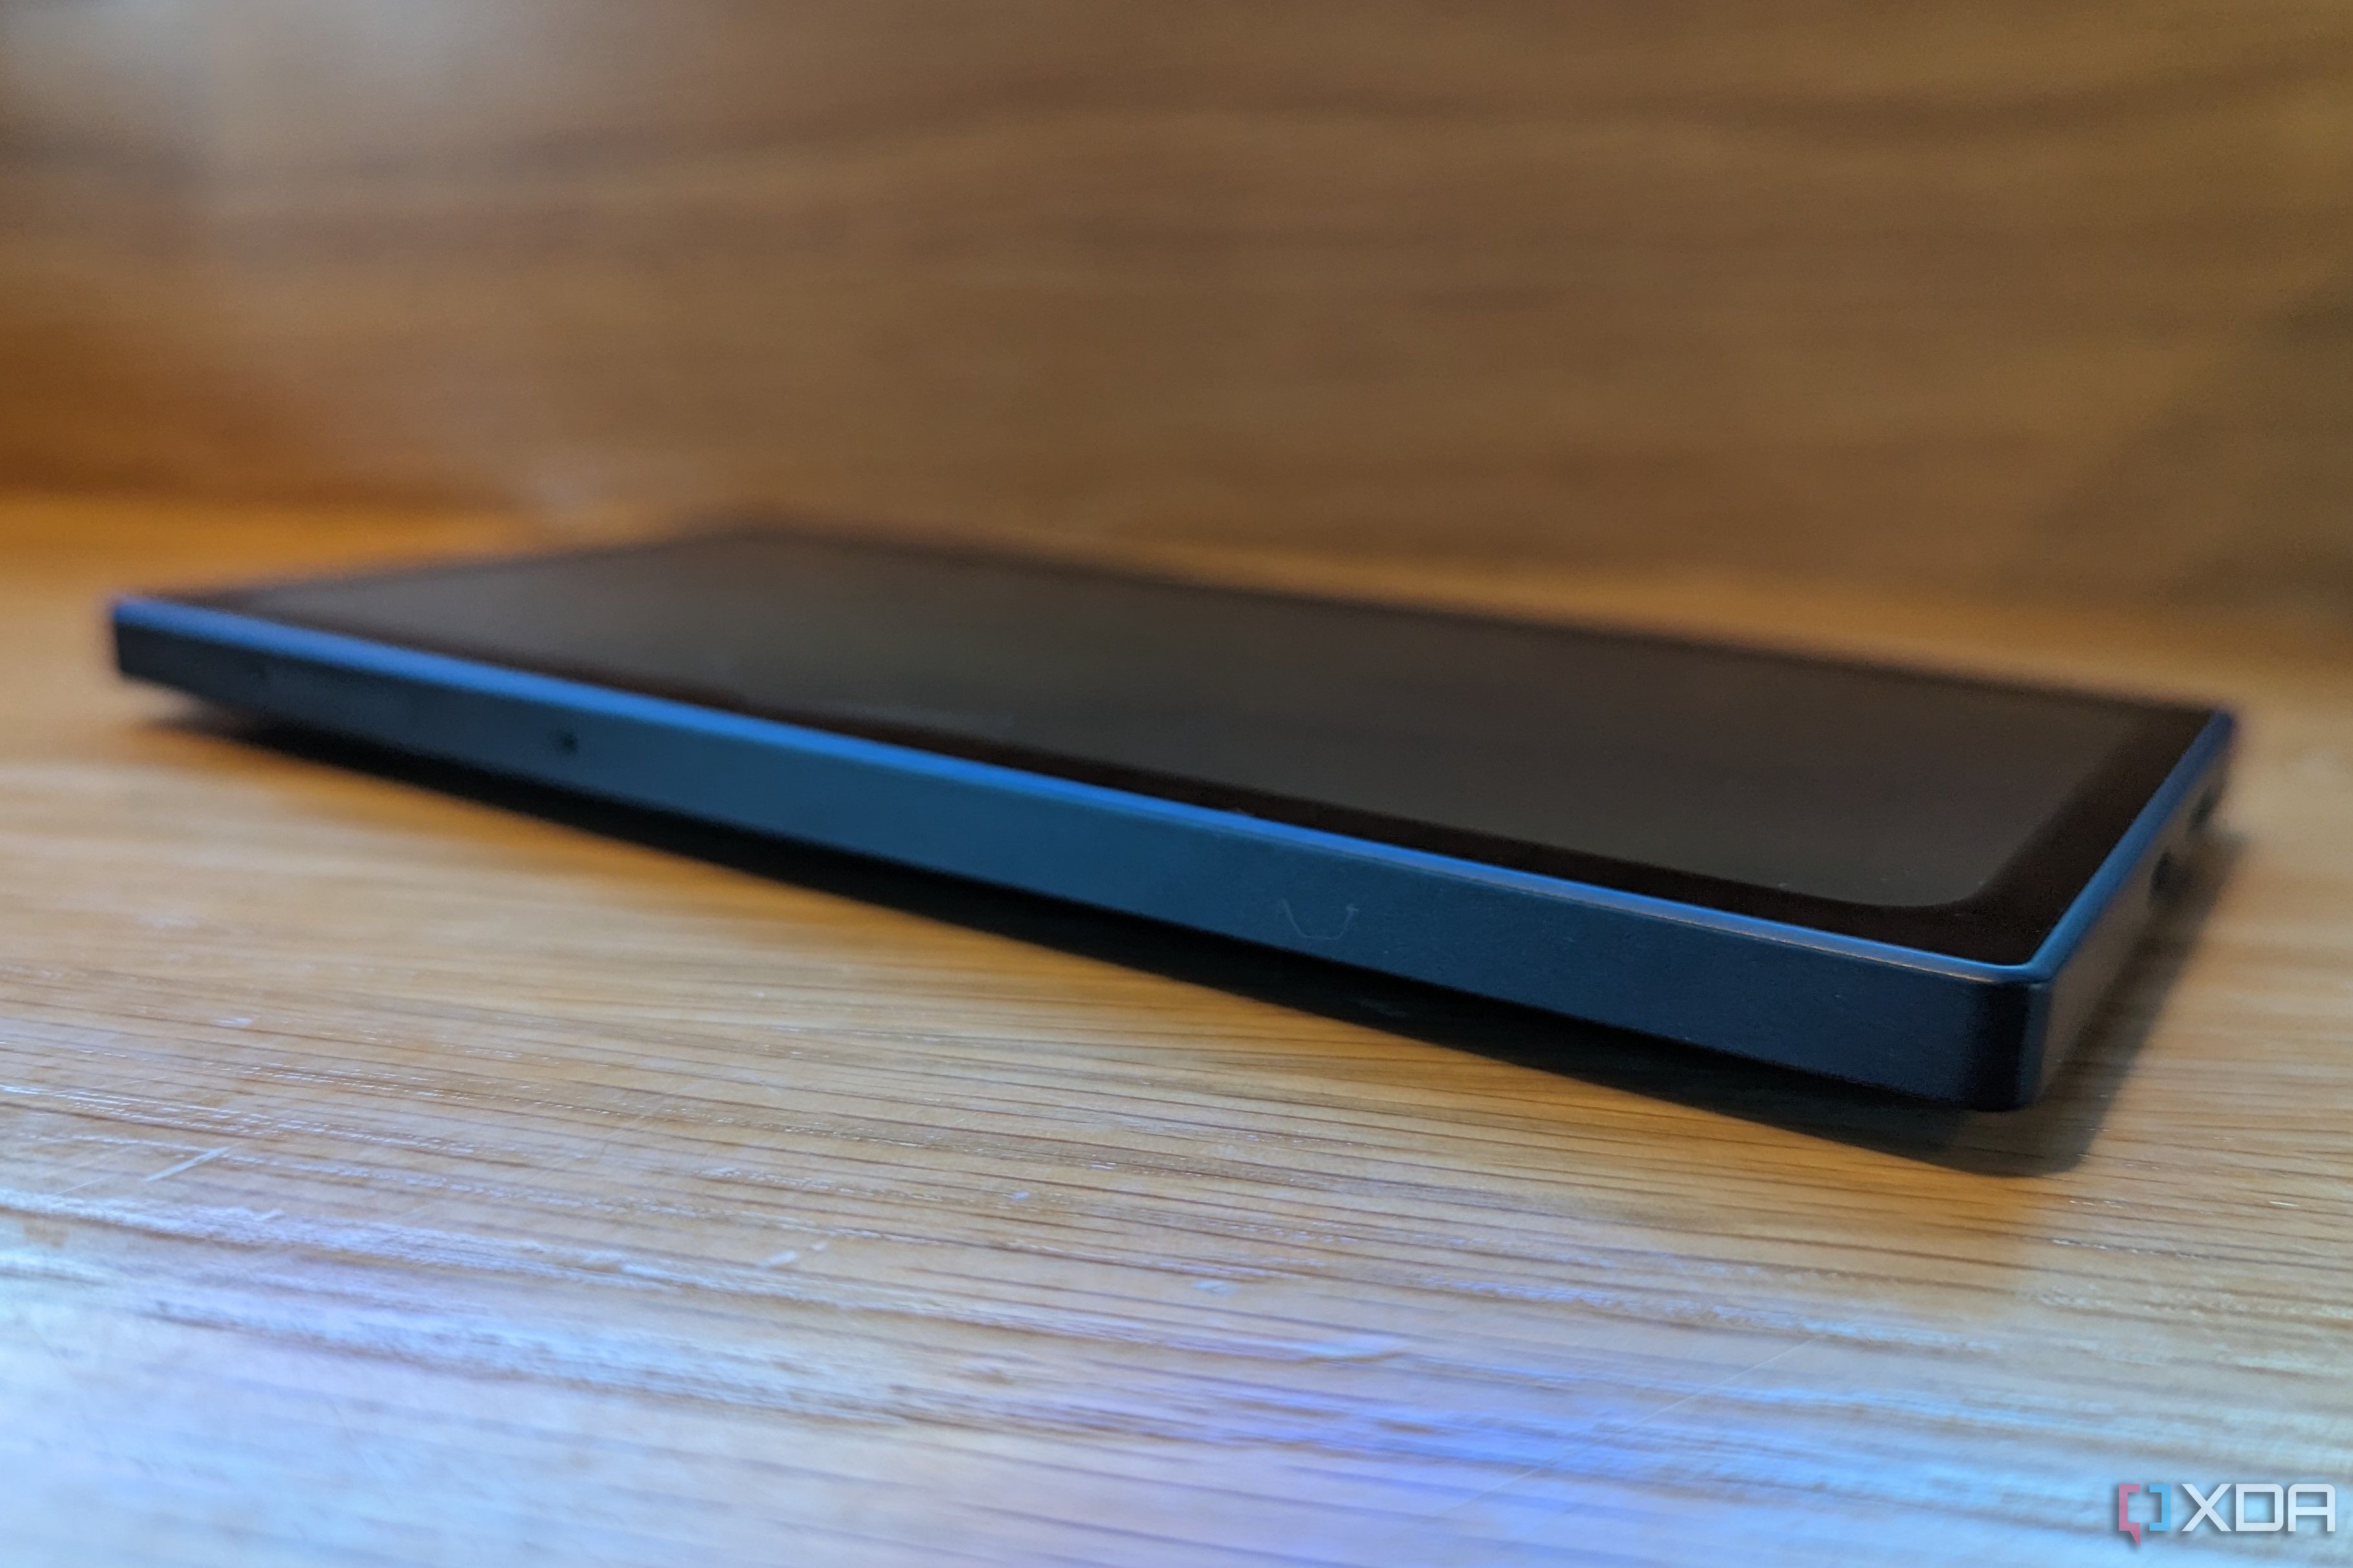 Razer Edge 5G tablet on its side